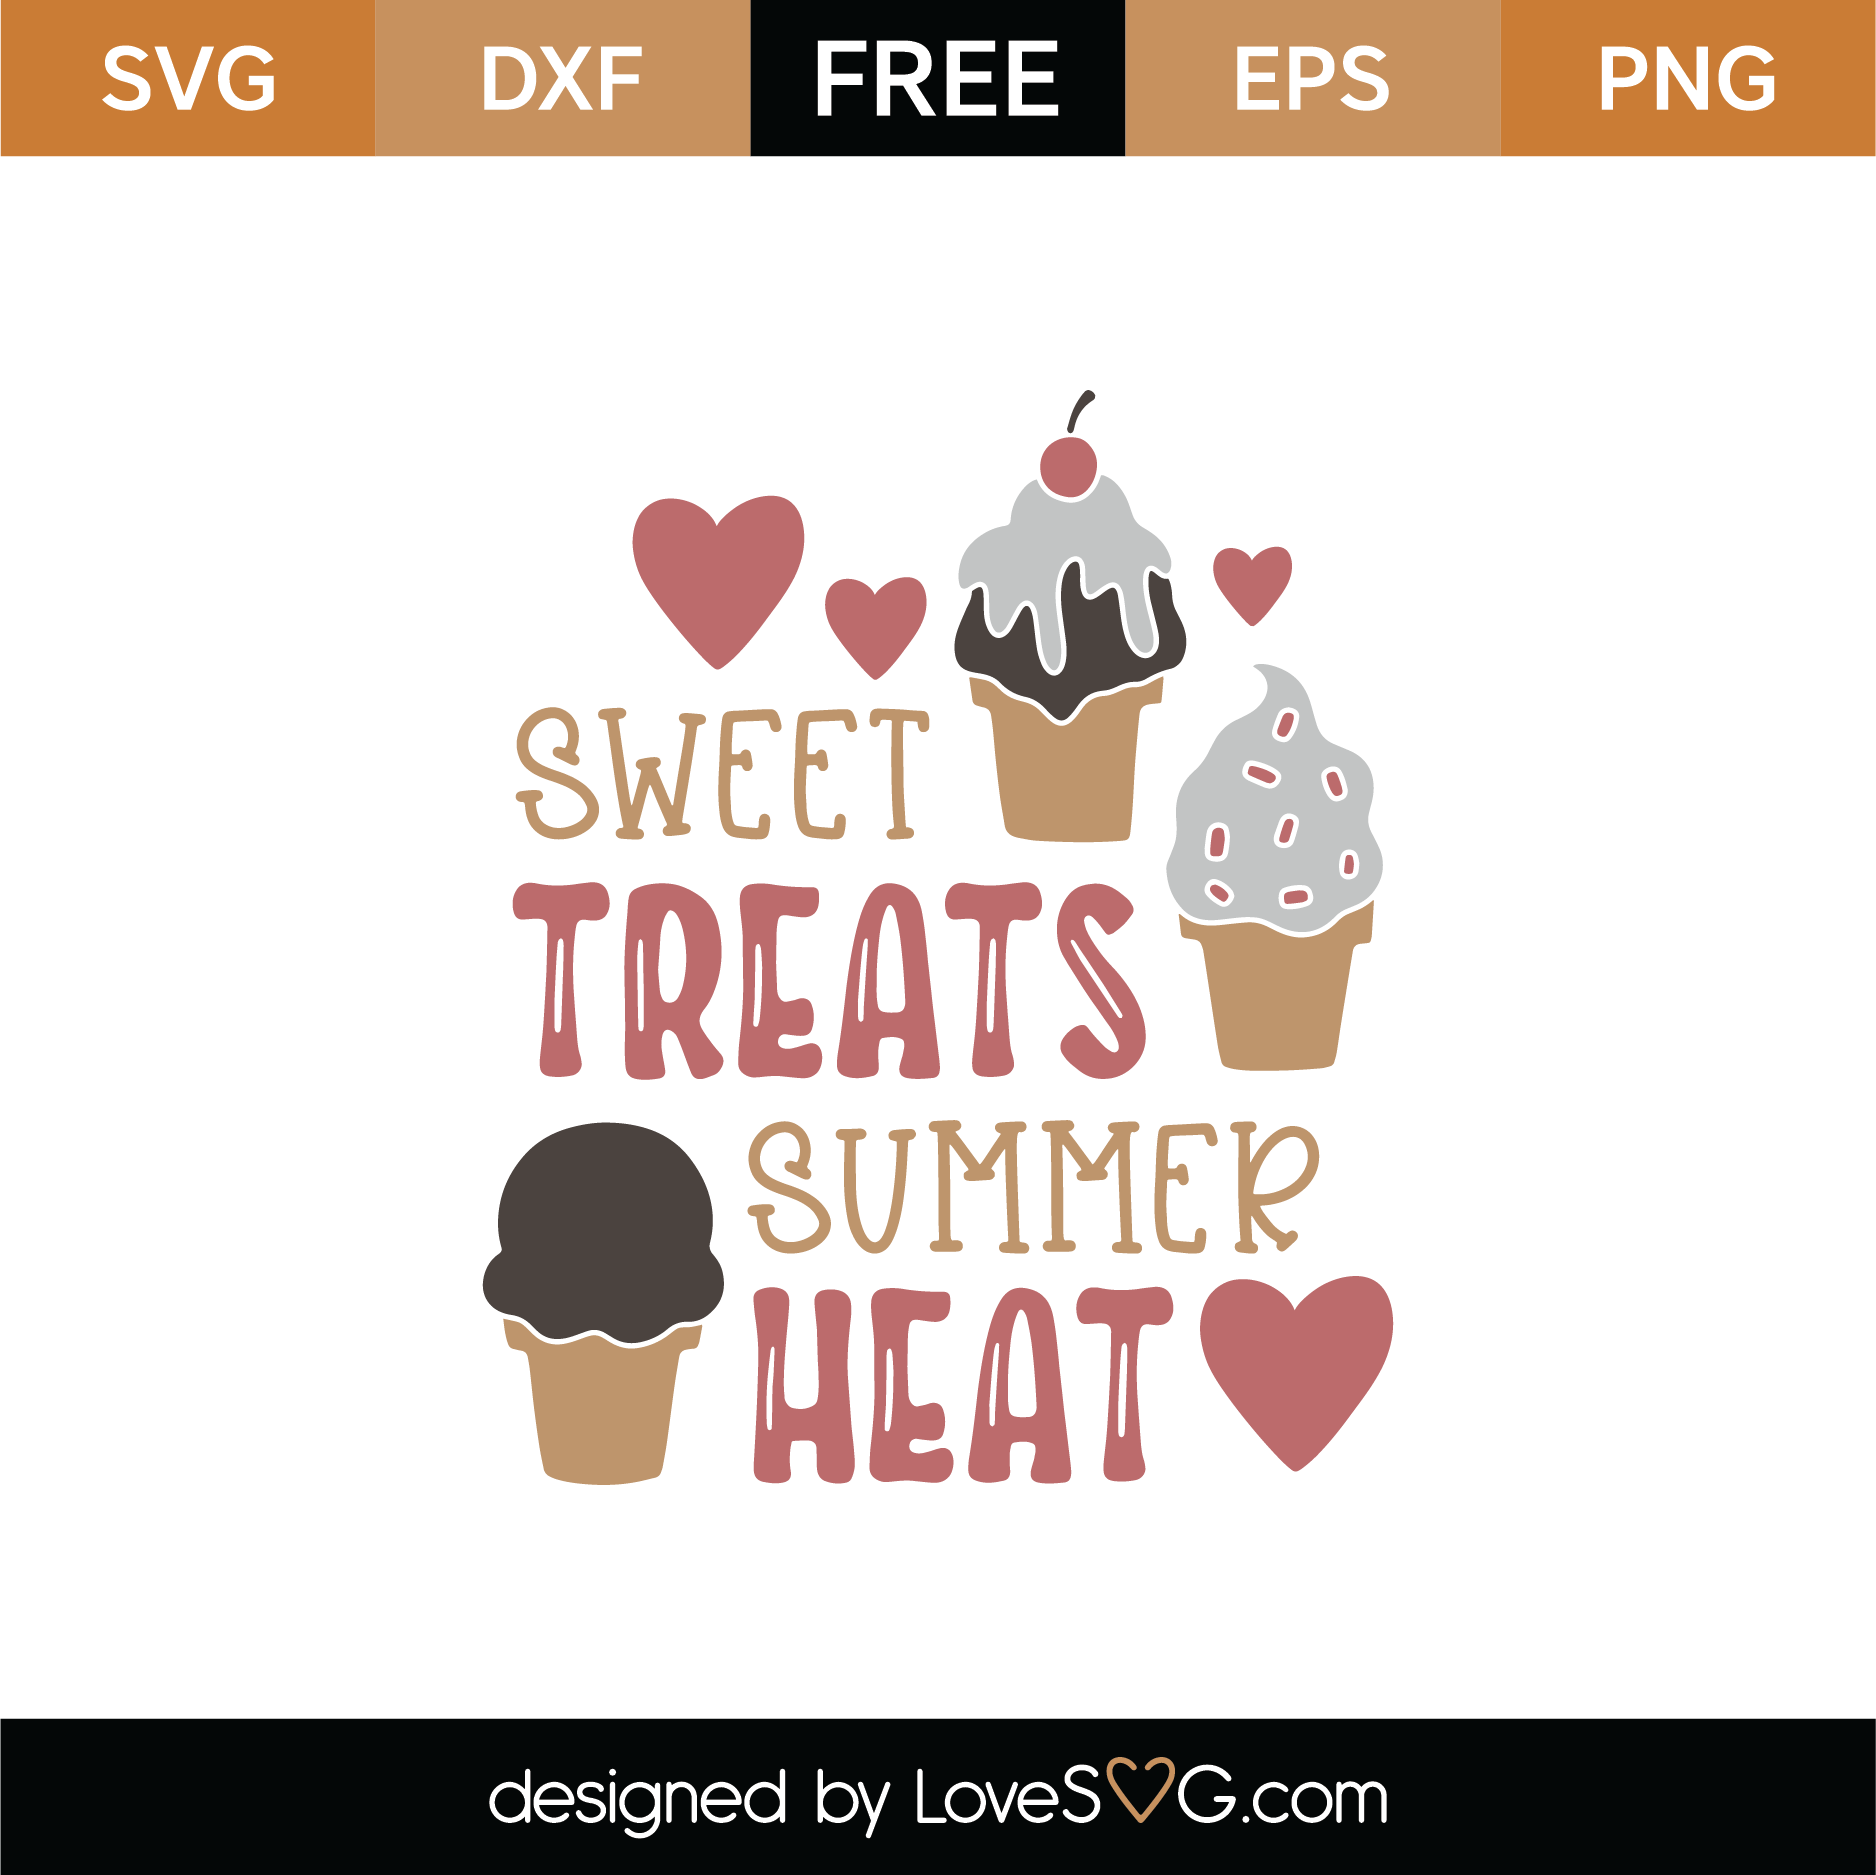 Free Sweet Treats Summer Heat SVG Cut File | Lovesvg.com